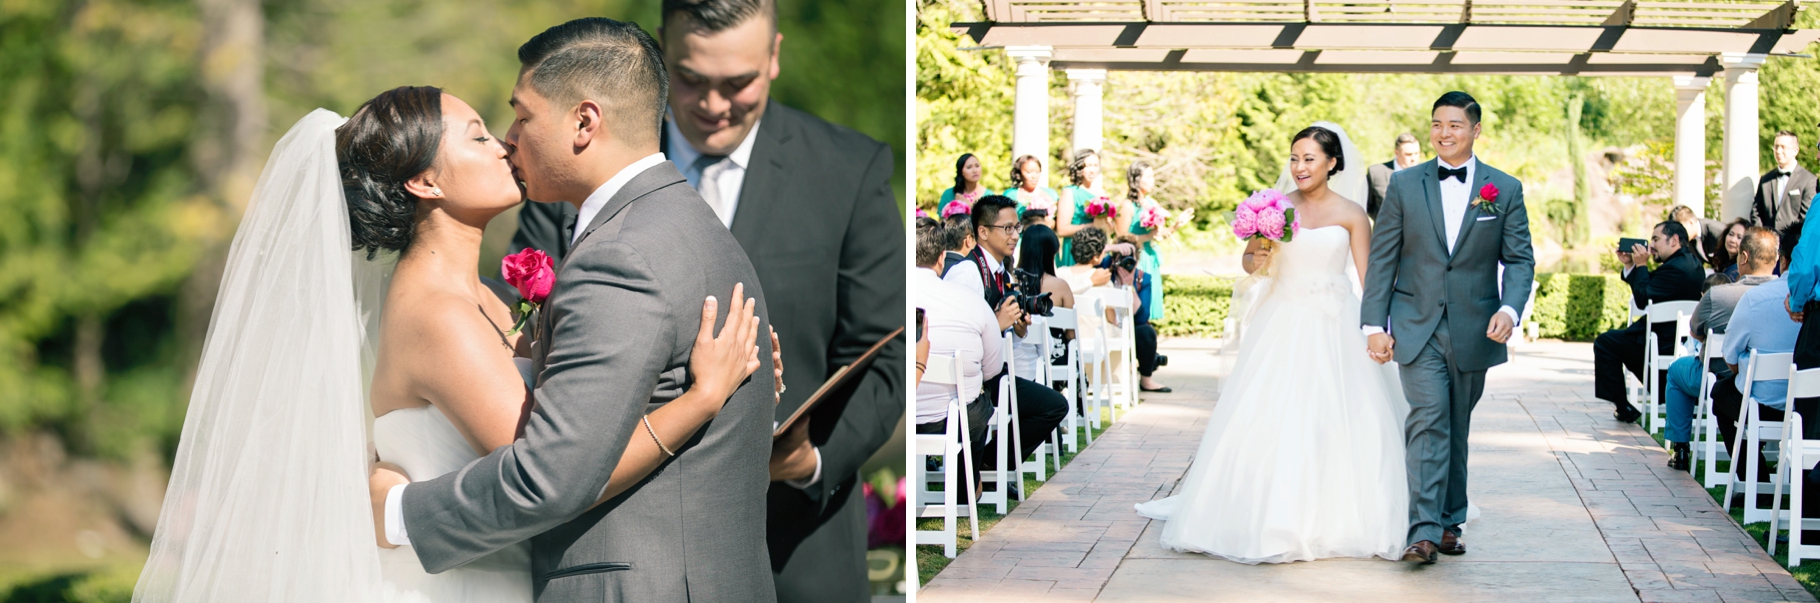 32-Rock-Creek-Gardens-Filipino-Wedding-Ceremony-Bride-Groom-Photographer-Seattle-Wedding-Photography-by-Betty-Elaine